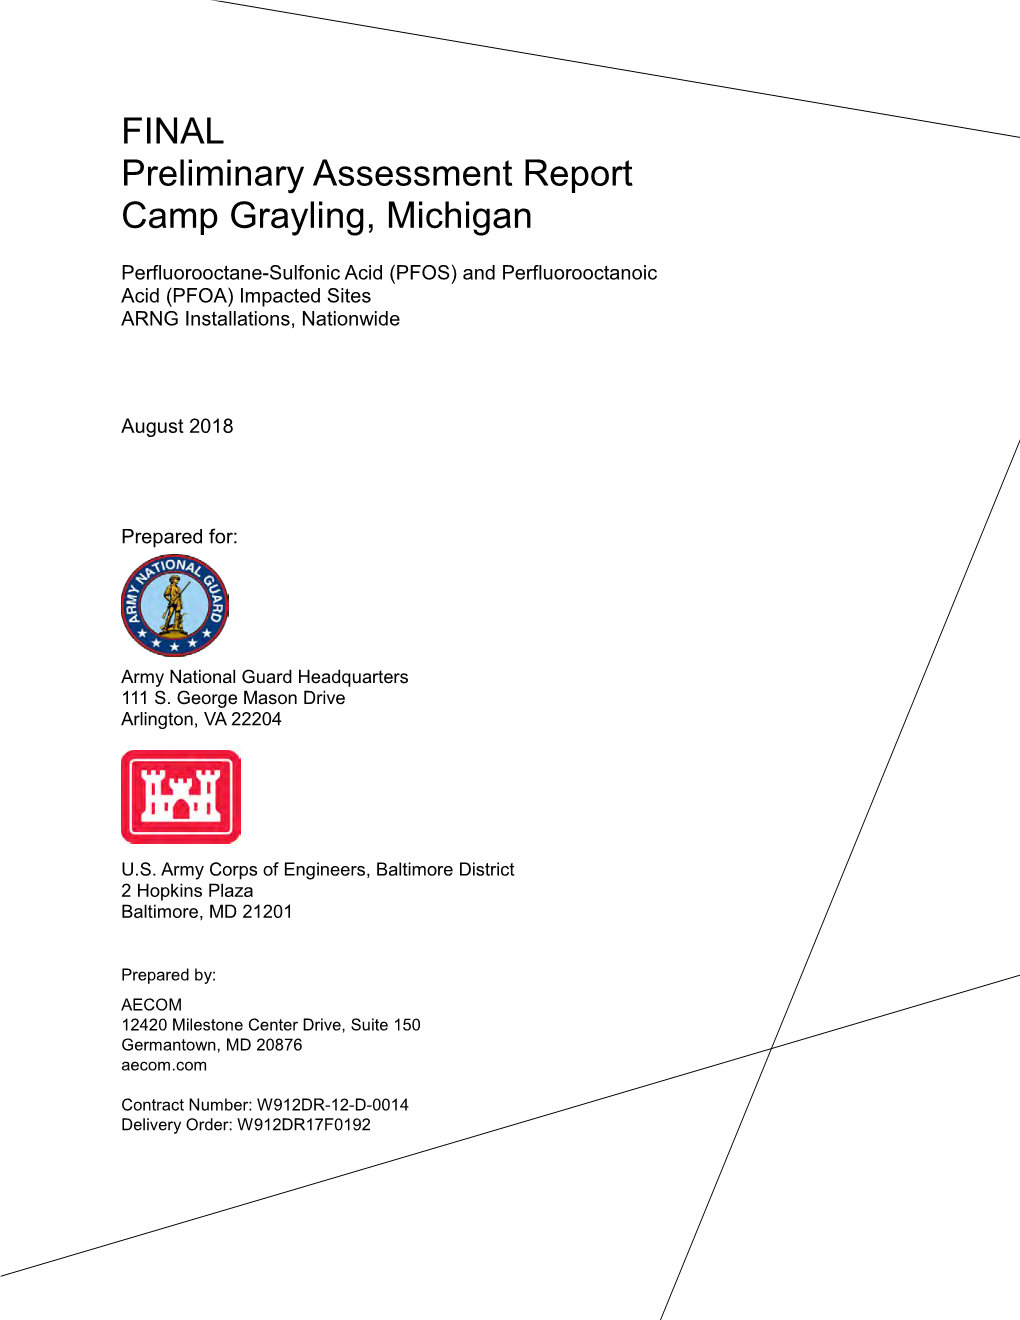 Final- Preliminary Assessment Report, Camp Grayling, Michigan